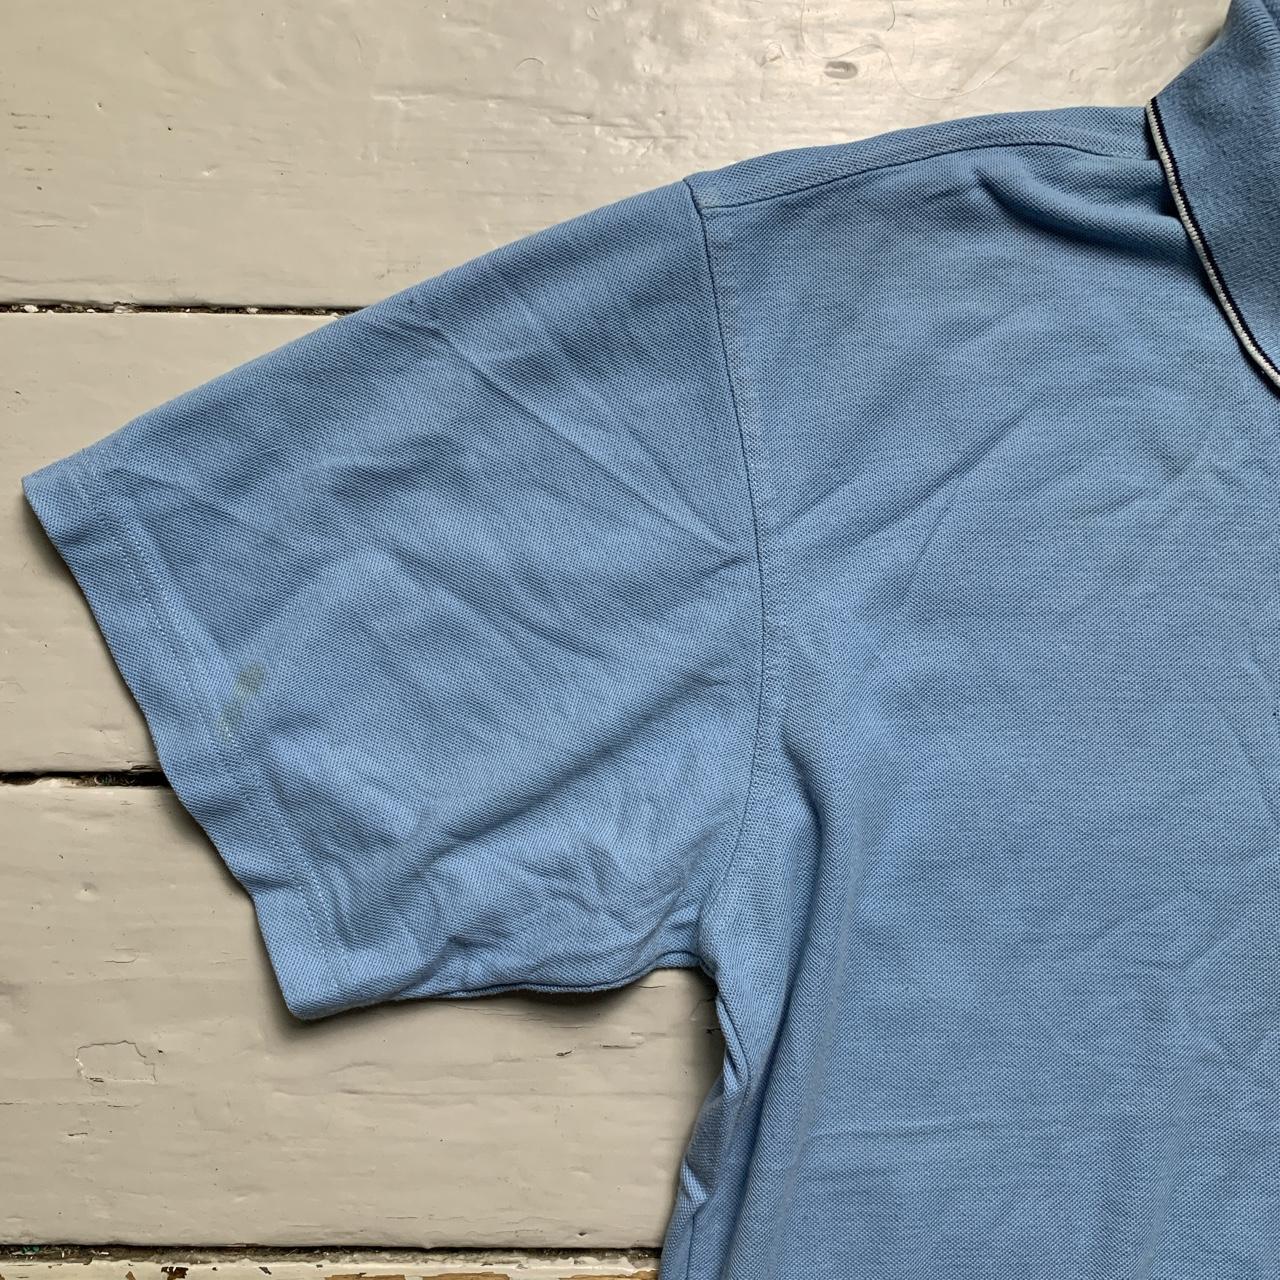 England Admiral Vintage Baby Blue Polo Football Shirt